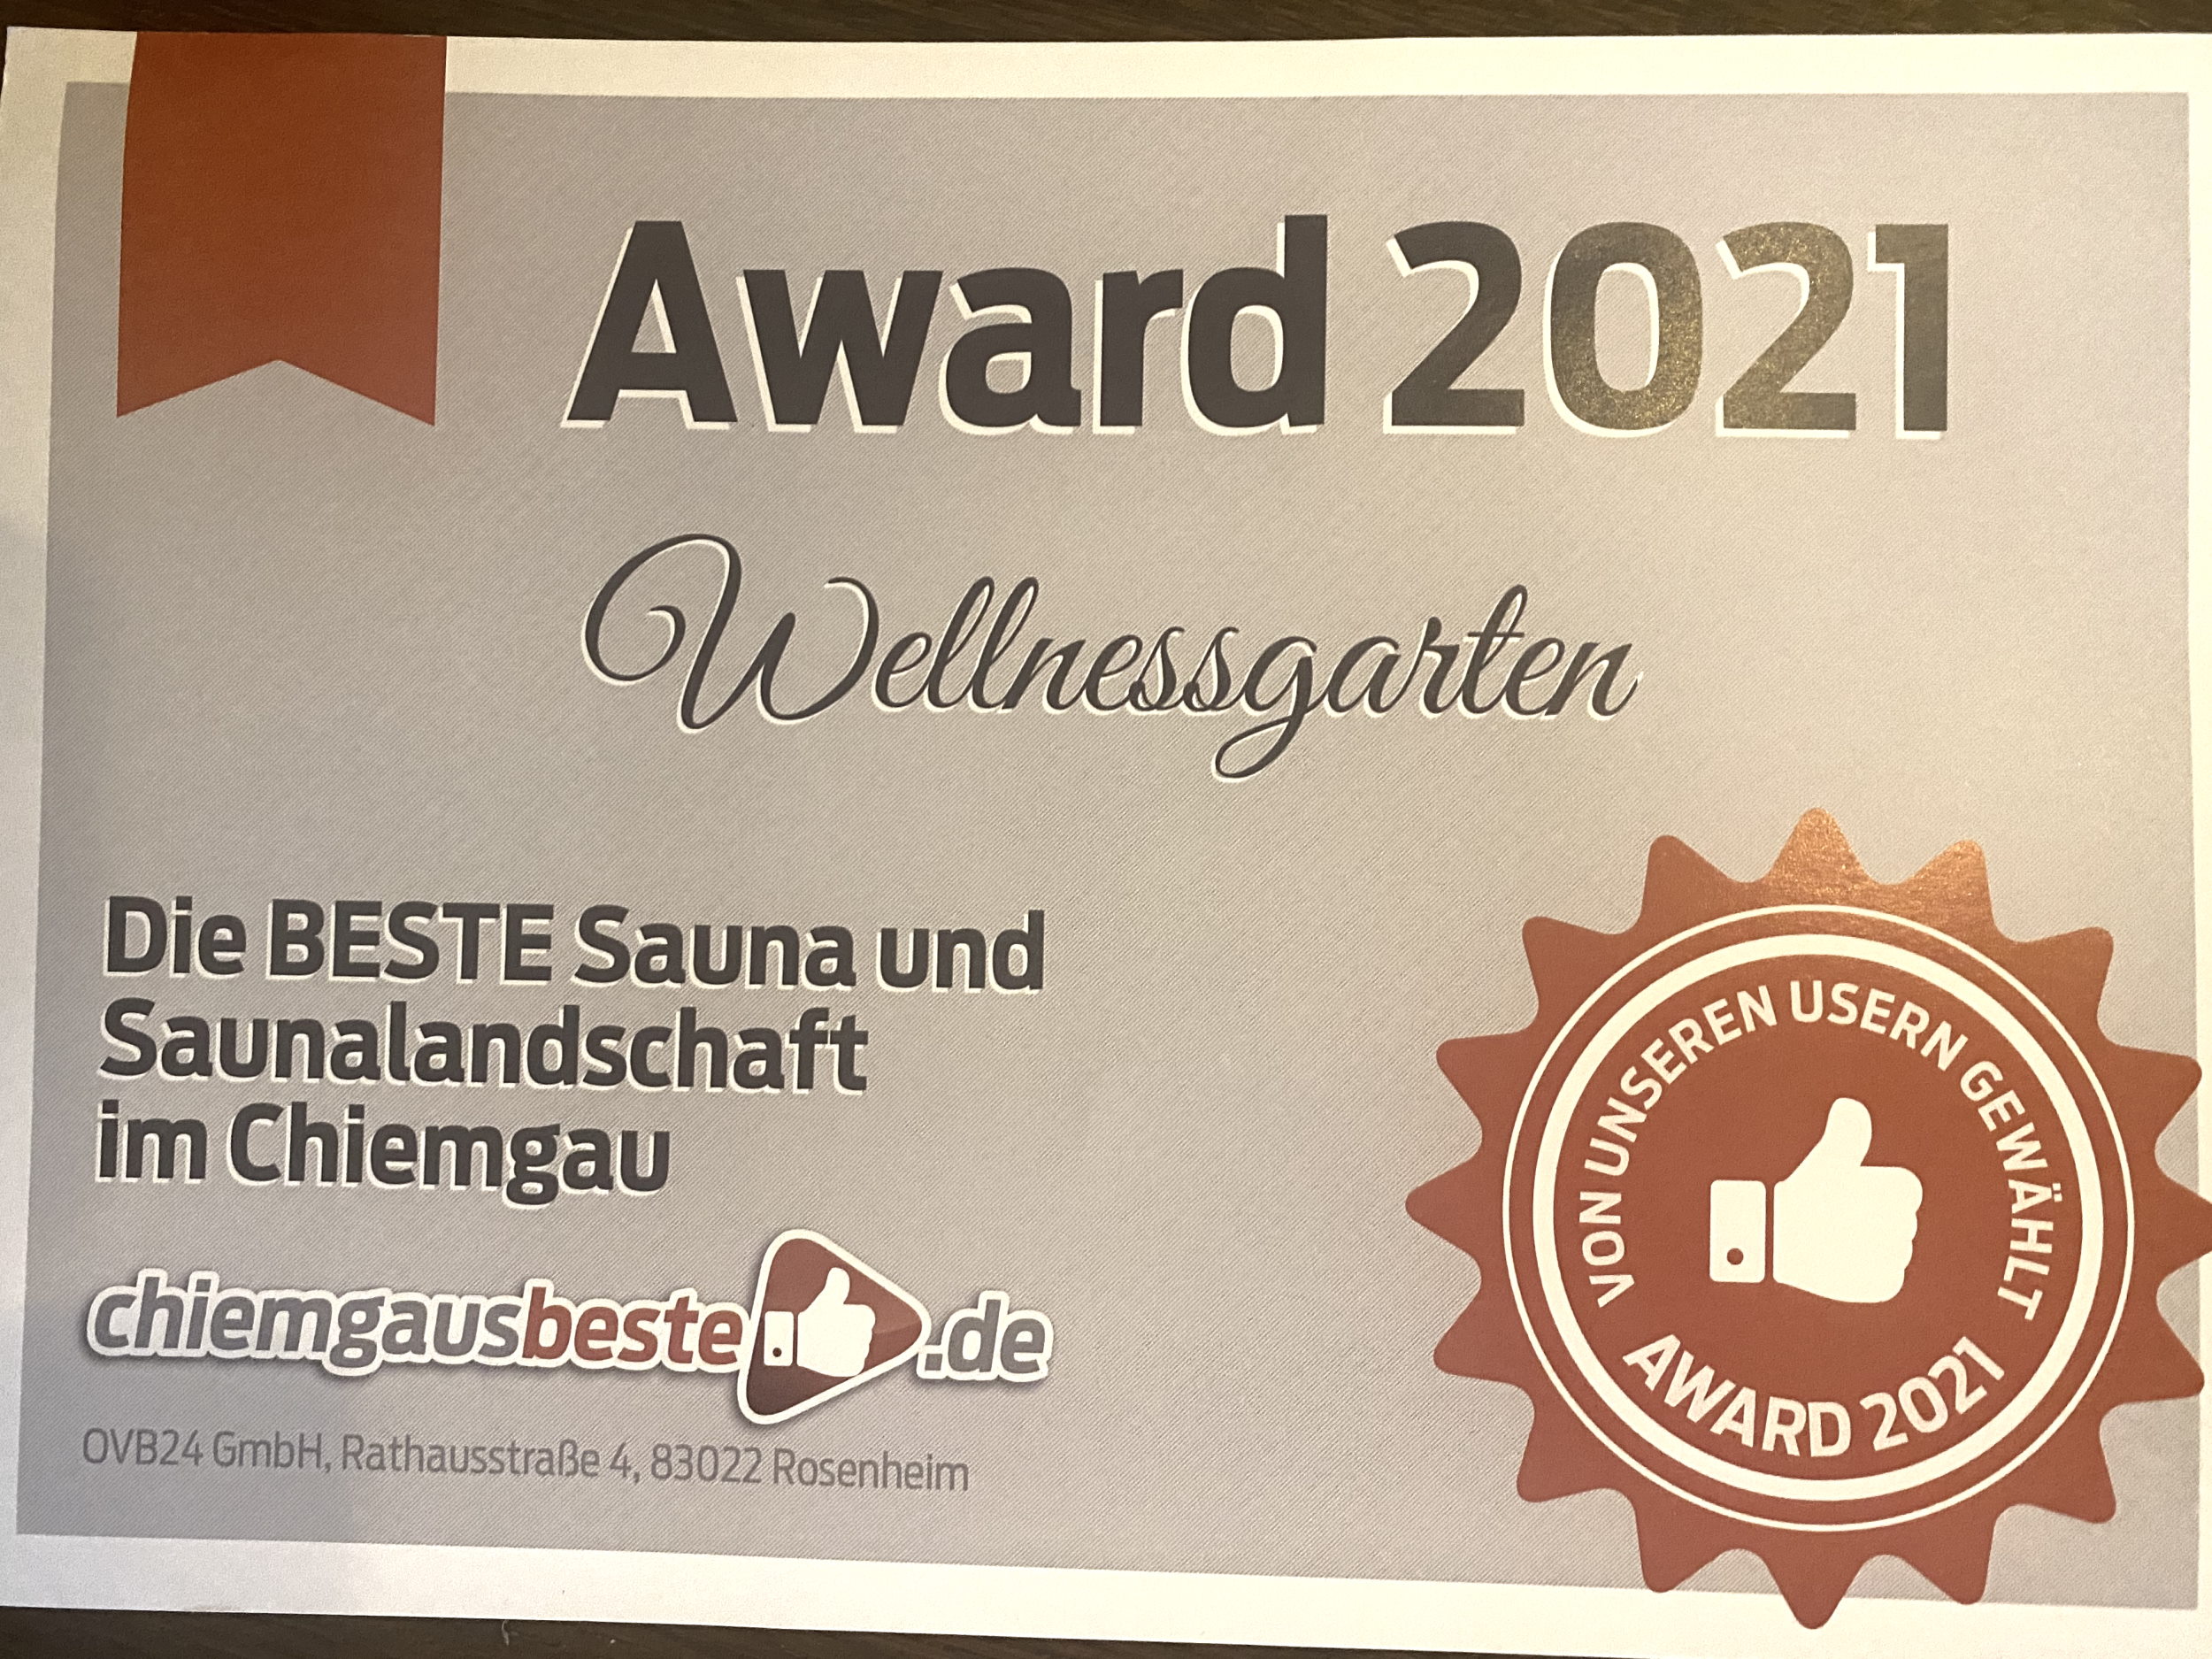 Wellnessgarten Award 2021